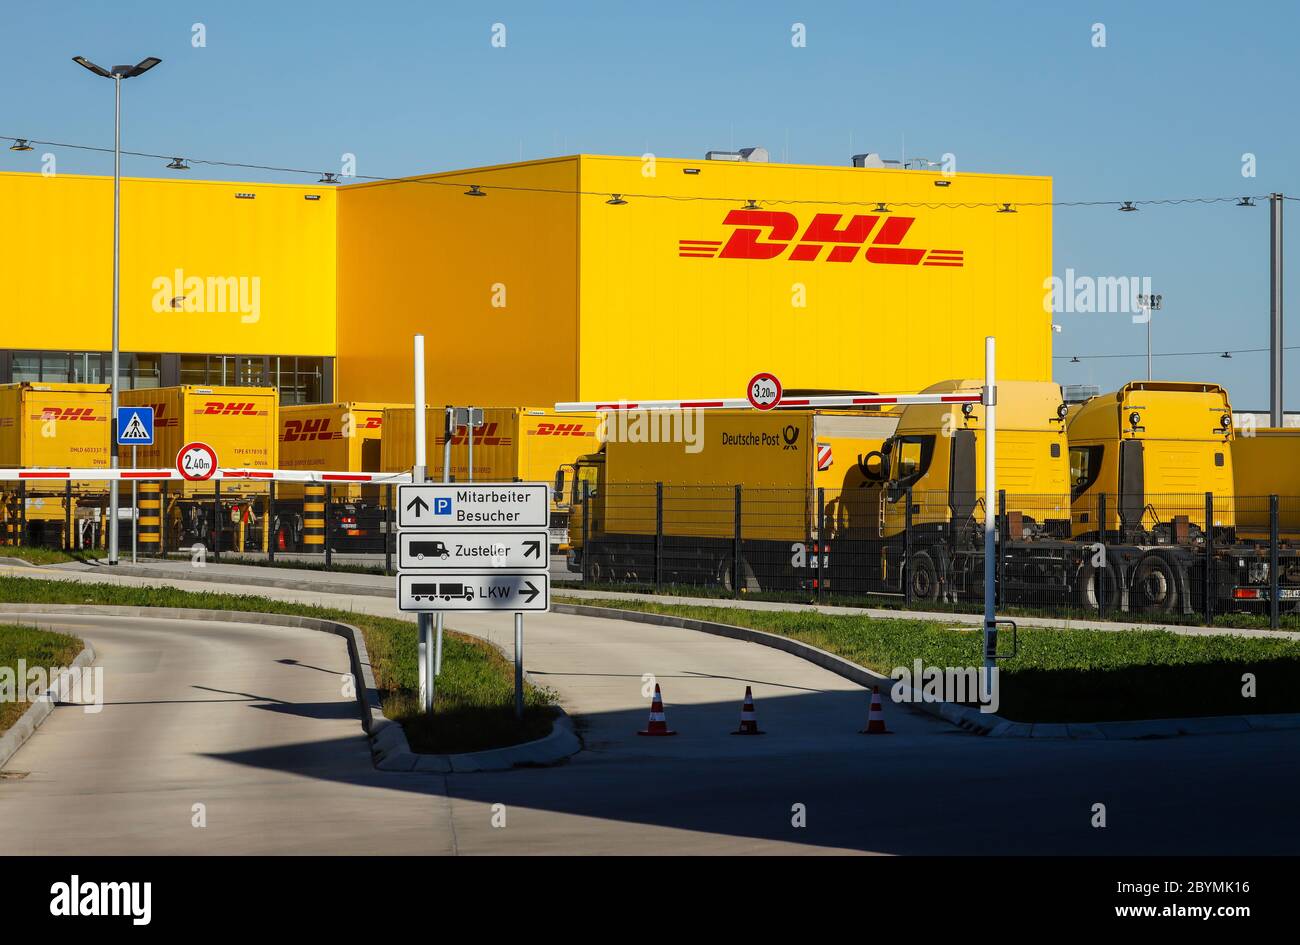 20.04.2020, Bochum, North Rhine-Westphalia, Germany - DHL Logistik Paketzentrum, MARK 517, conversion of the former Opel plant Bochum site. 00X200420D Stock Photo